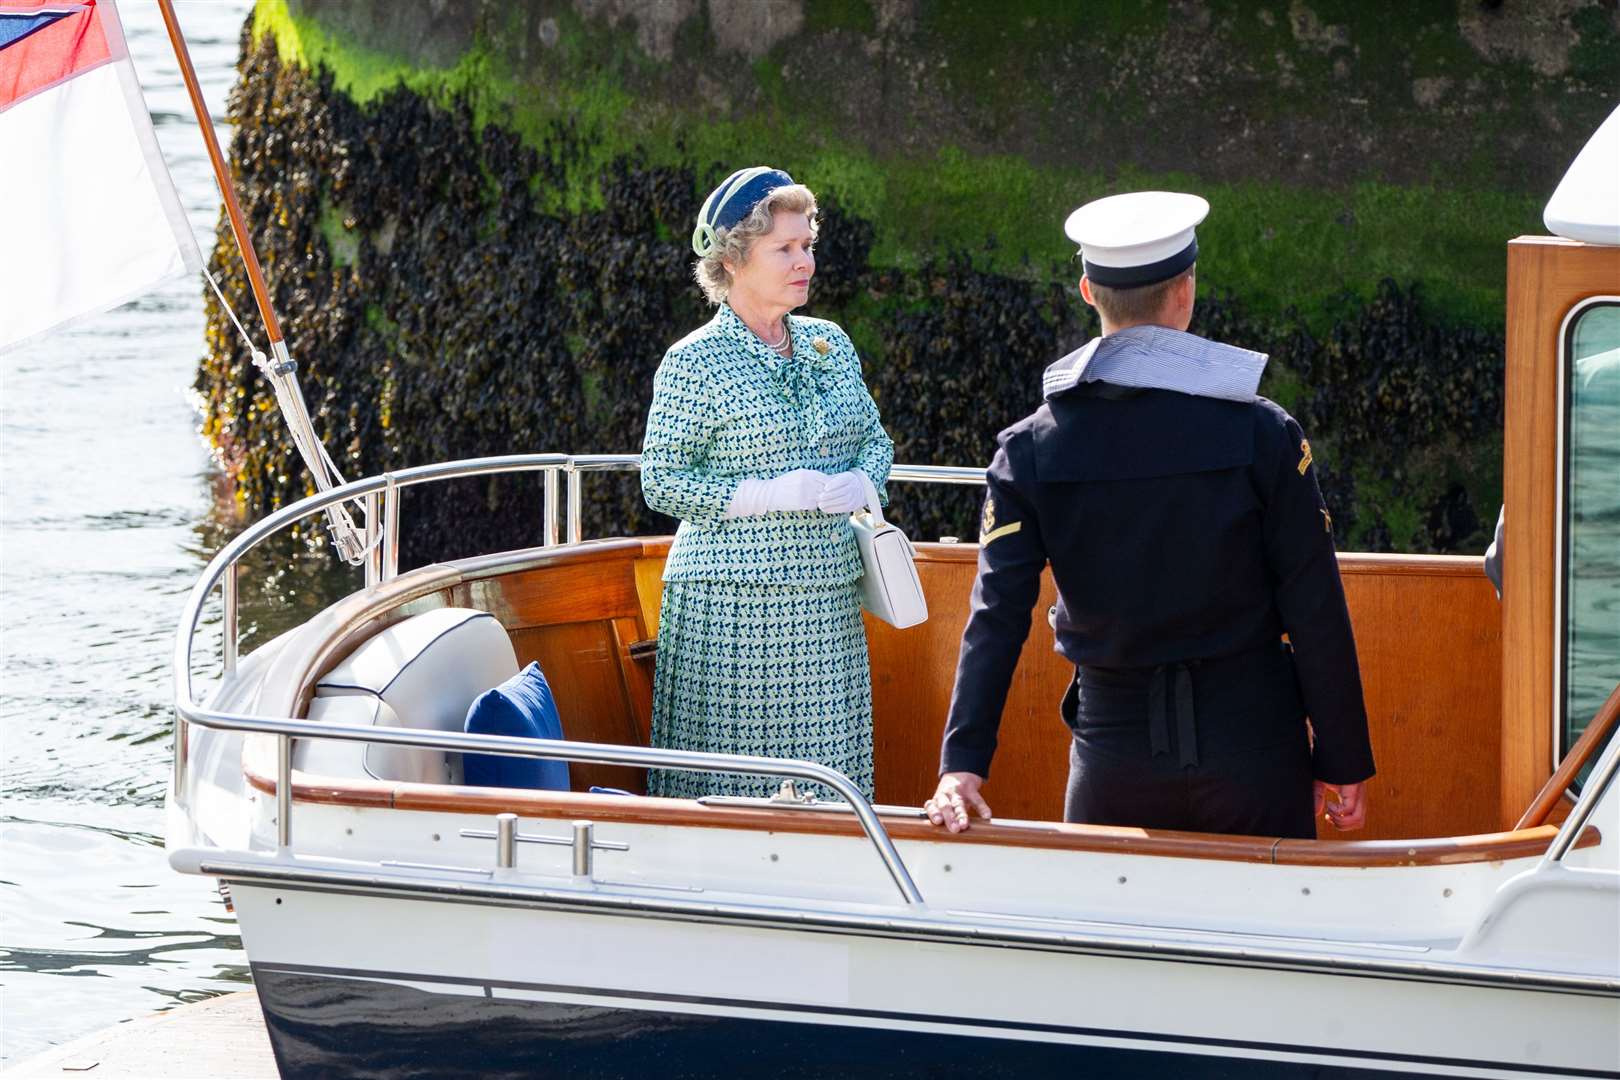 Imelda Staunton, who plays Queen Elizabeth II, during filming at Macduff harbour. Picture: Daniel Forsyth.